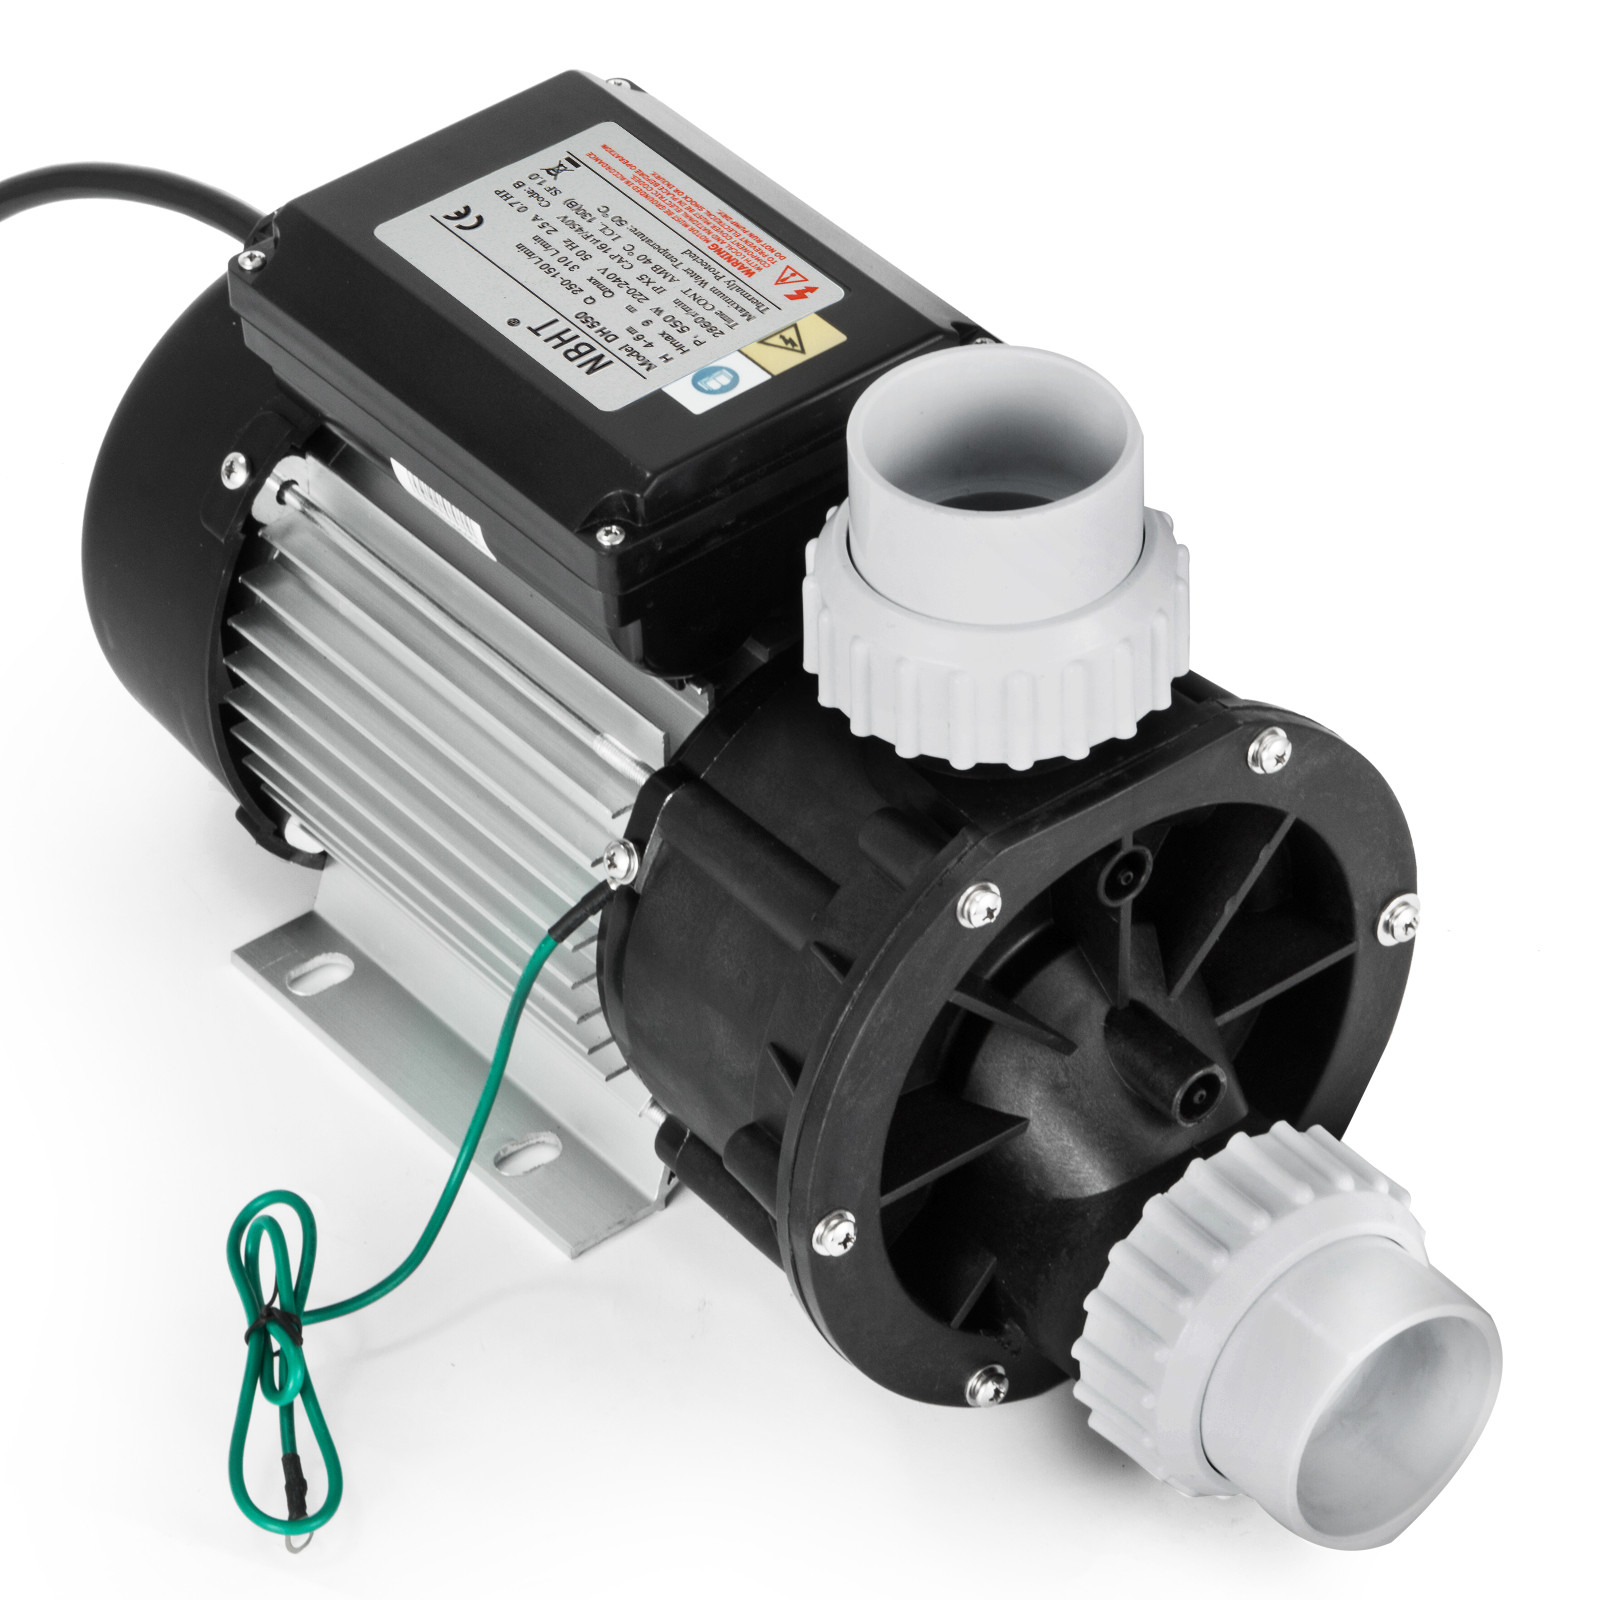 Pump Whirlpool Spa JA75 Circulation Pump Filter Pump Filter 0,75 Ps 550 Watt